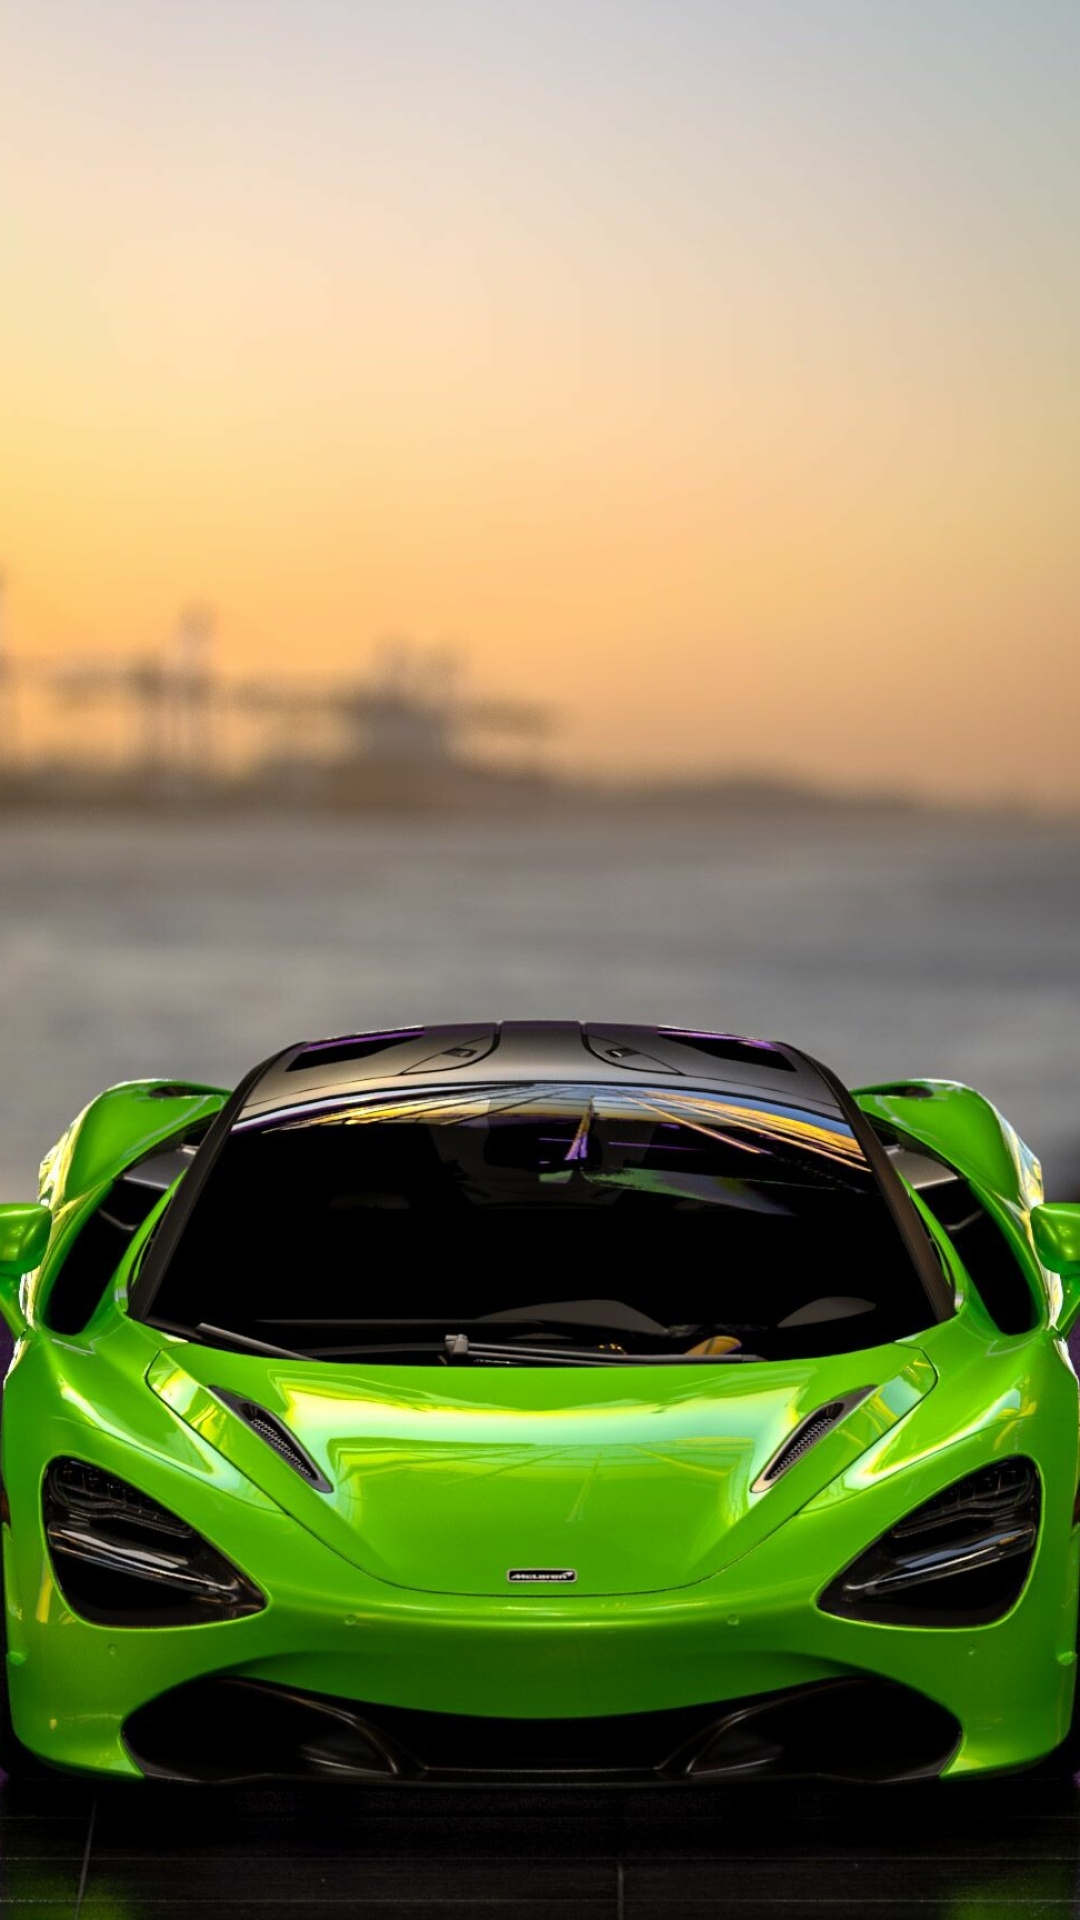 McLaren: British luxury automobile manufacturer, A pioneer of carbon fiber bodies. 1080x1920 Full HD Wallpaper.